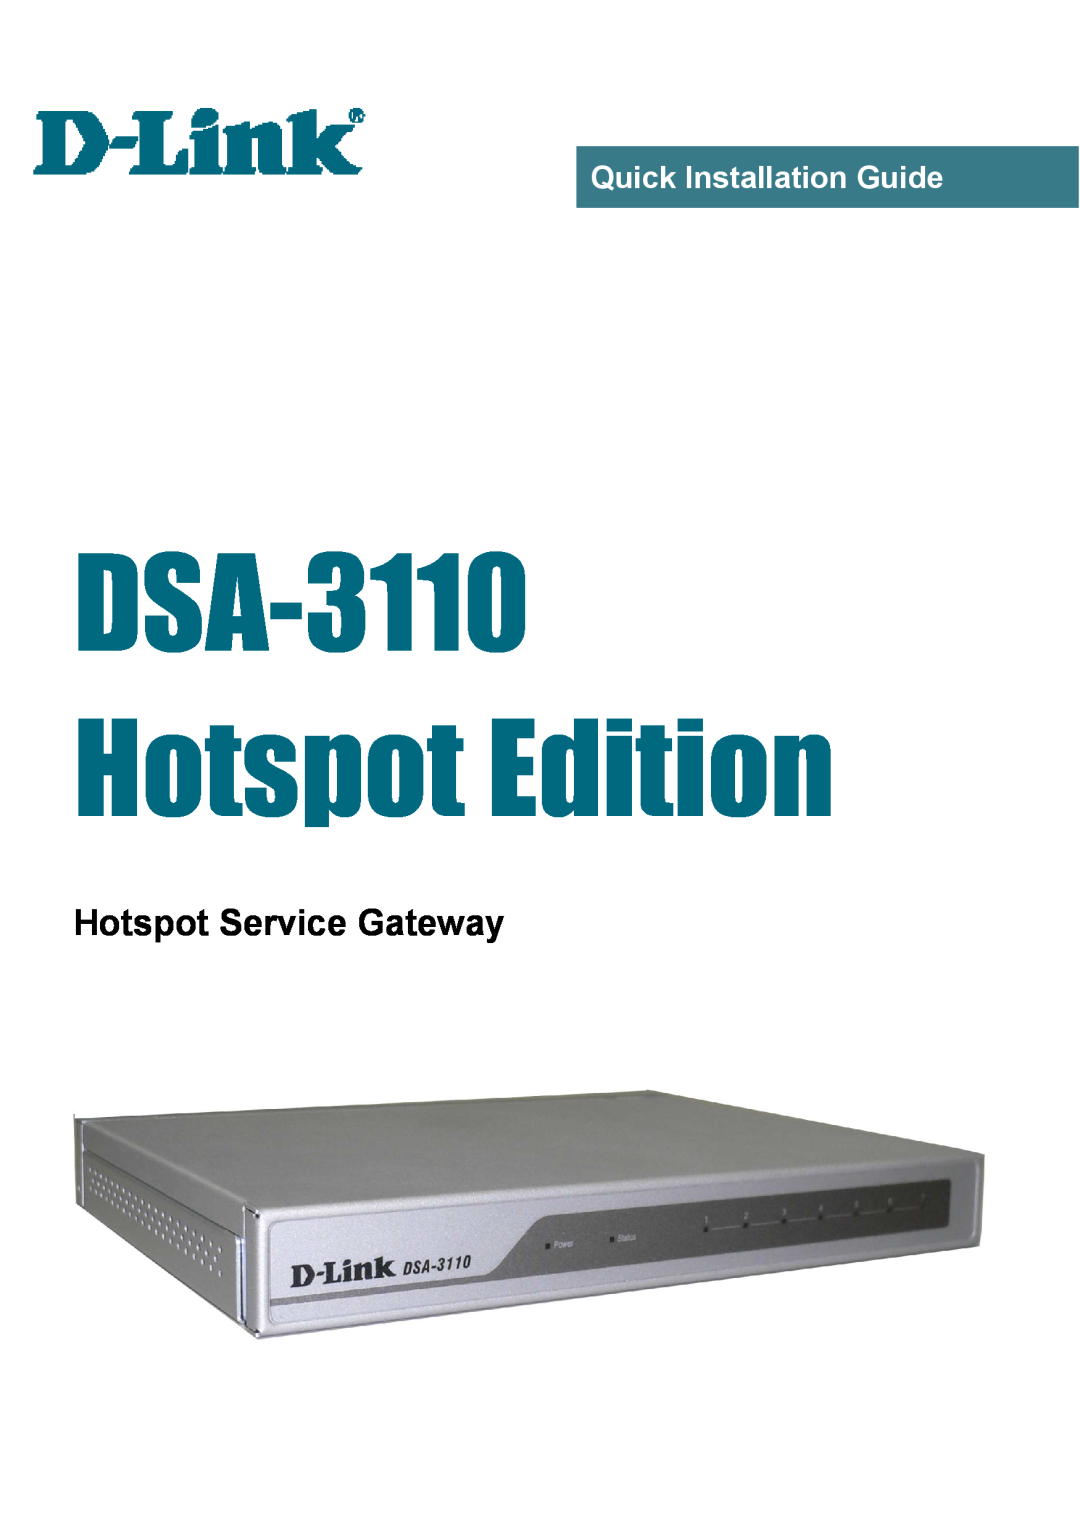 D-Link manual DSA-3110 Hotspot Edition, Hotspot Service Gateway, Quick Installation Guide 